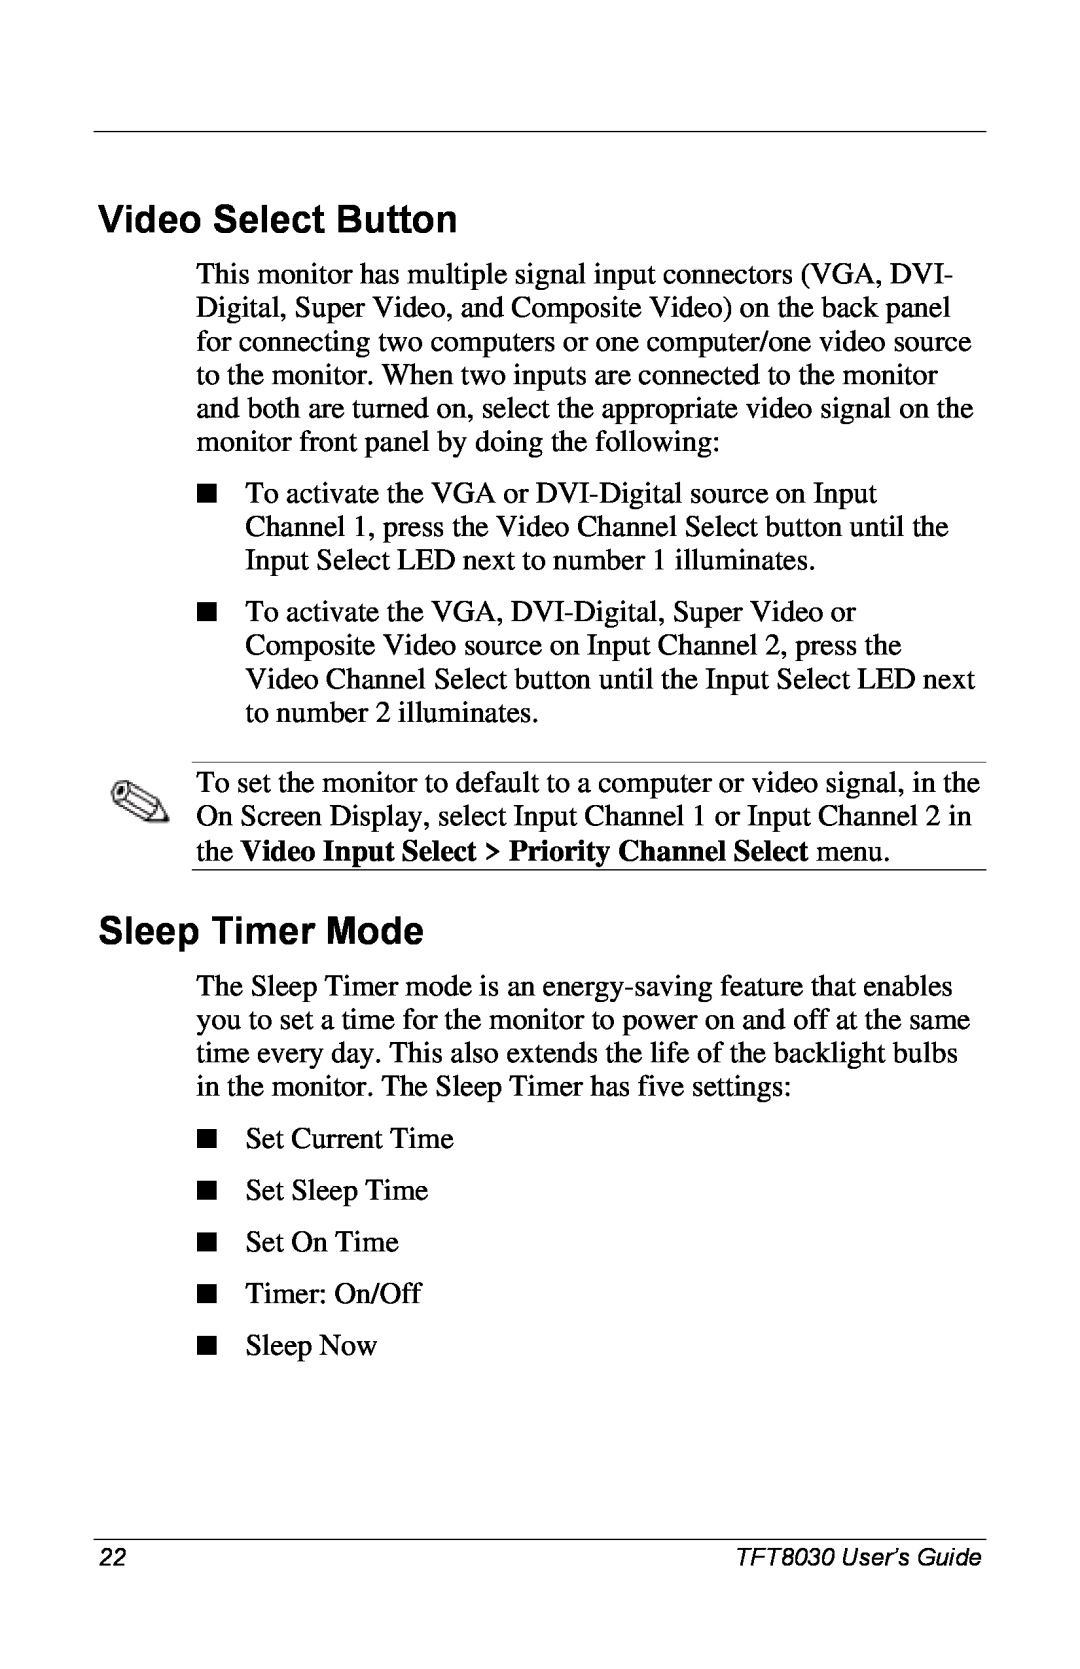 Compaq 8030 manual Video Select Button, Sleep Timer Mode 